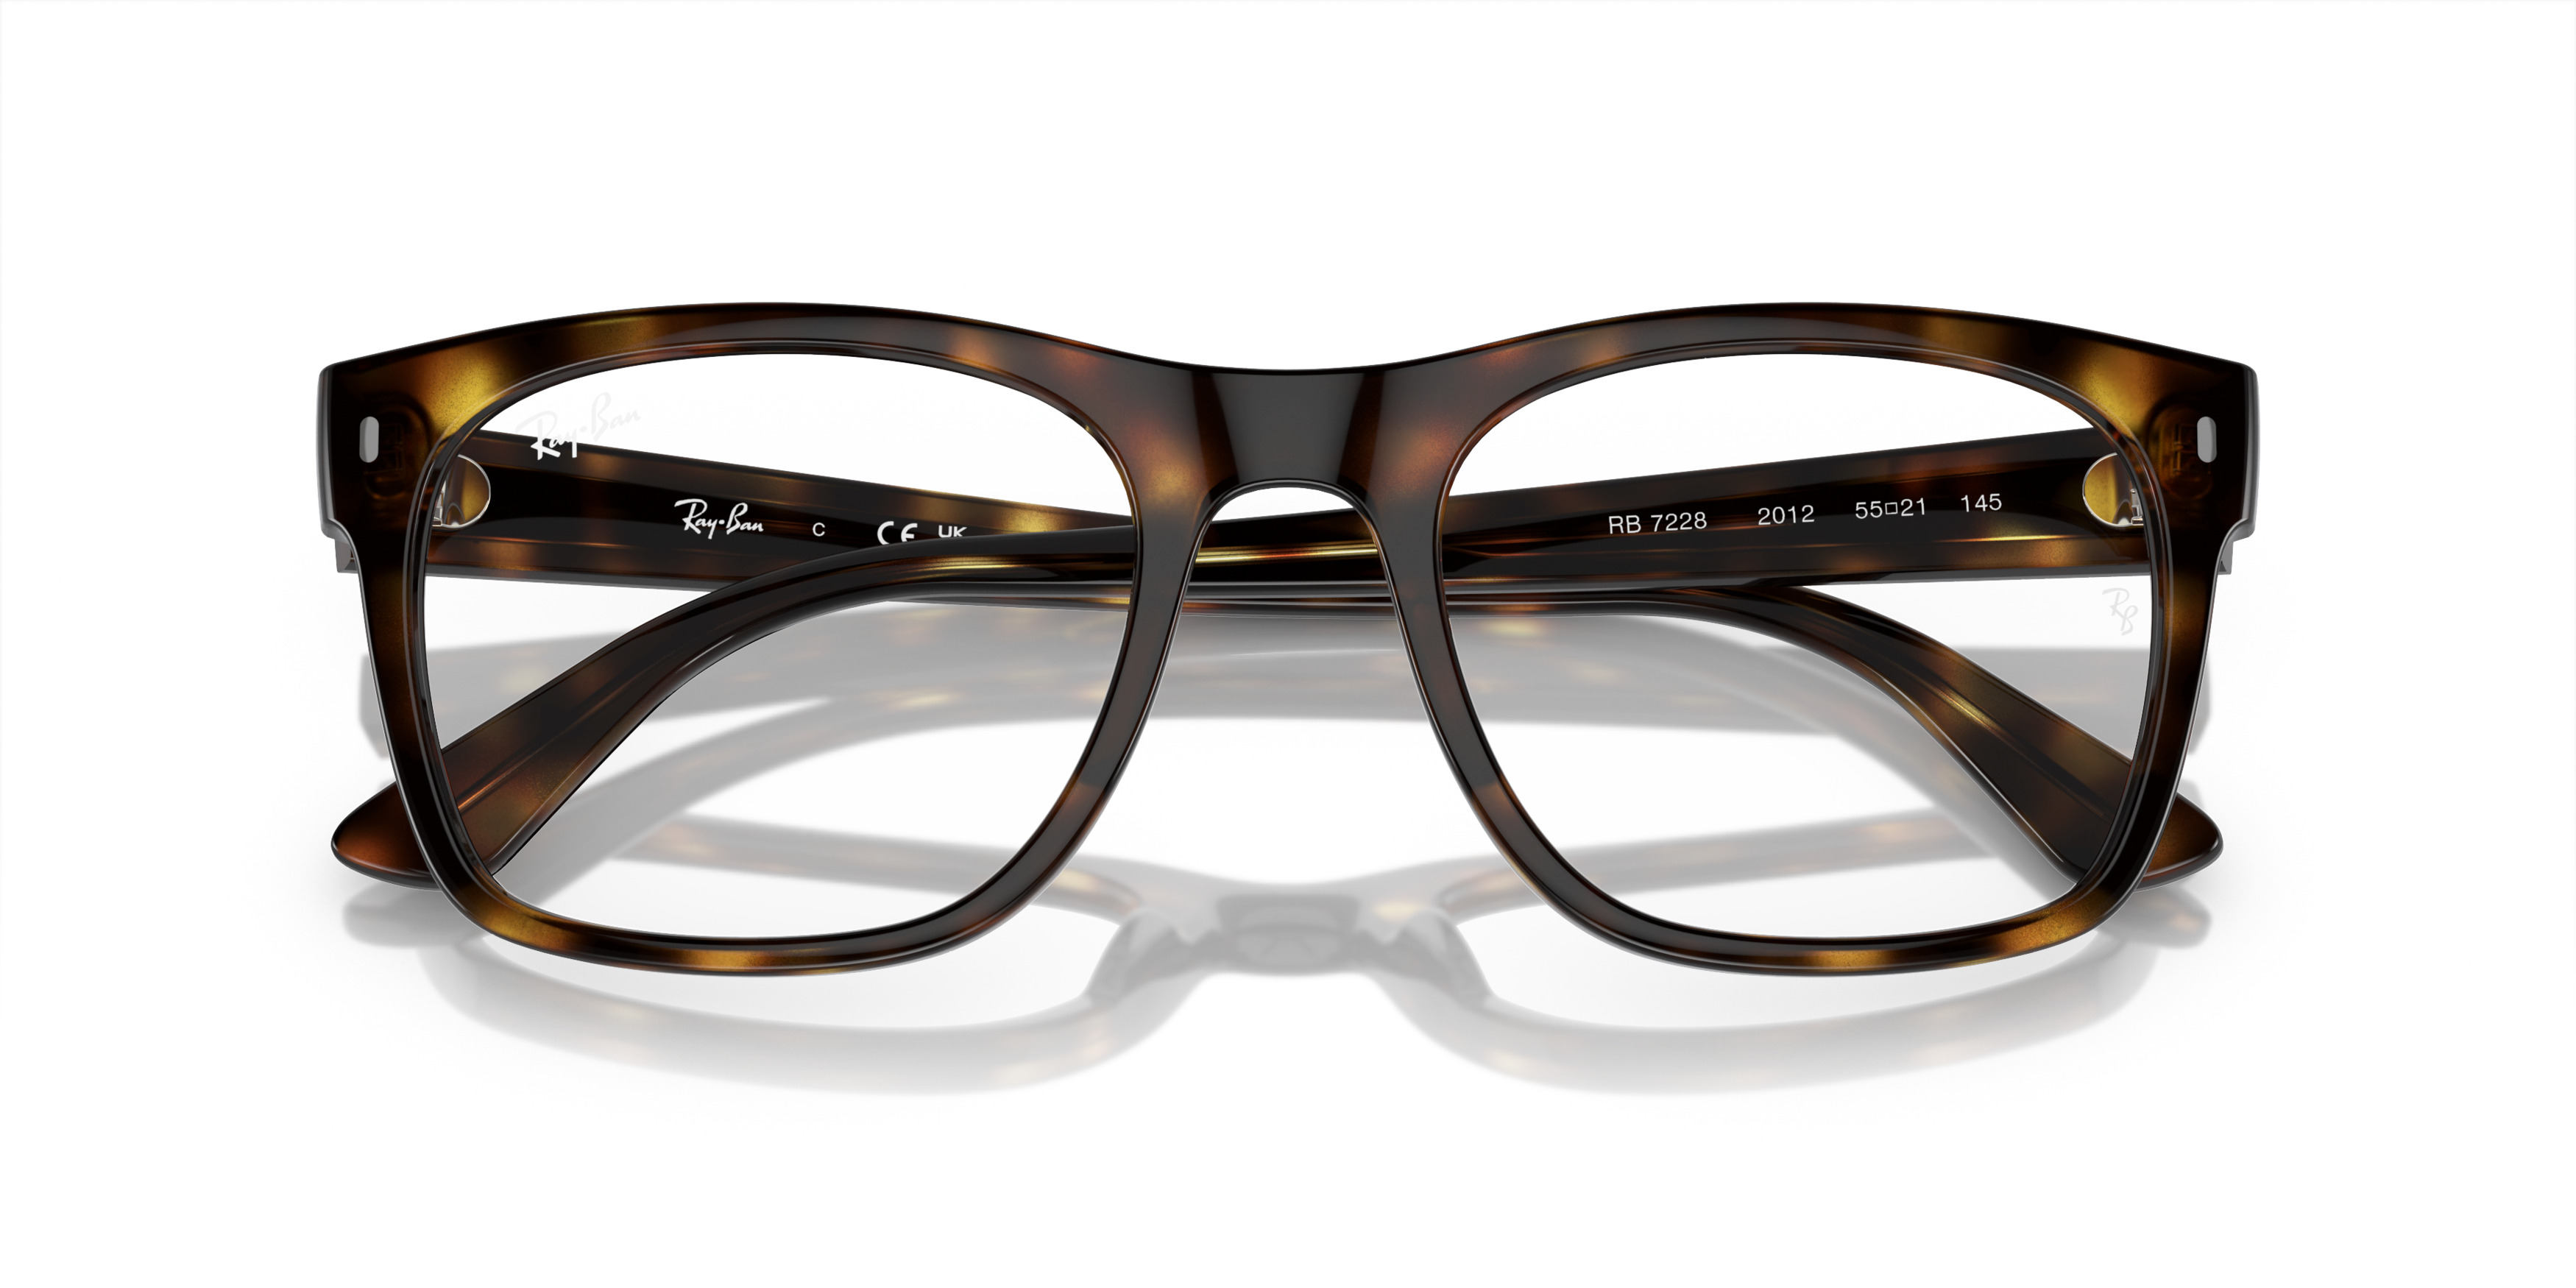 Folded Ray-Ban RX 7228 Glasses Transparent / Tortoise Shell